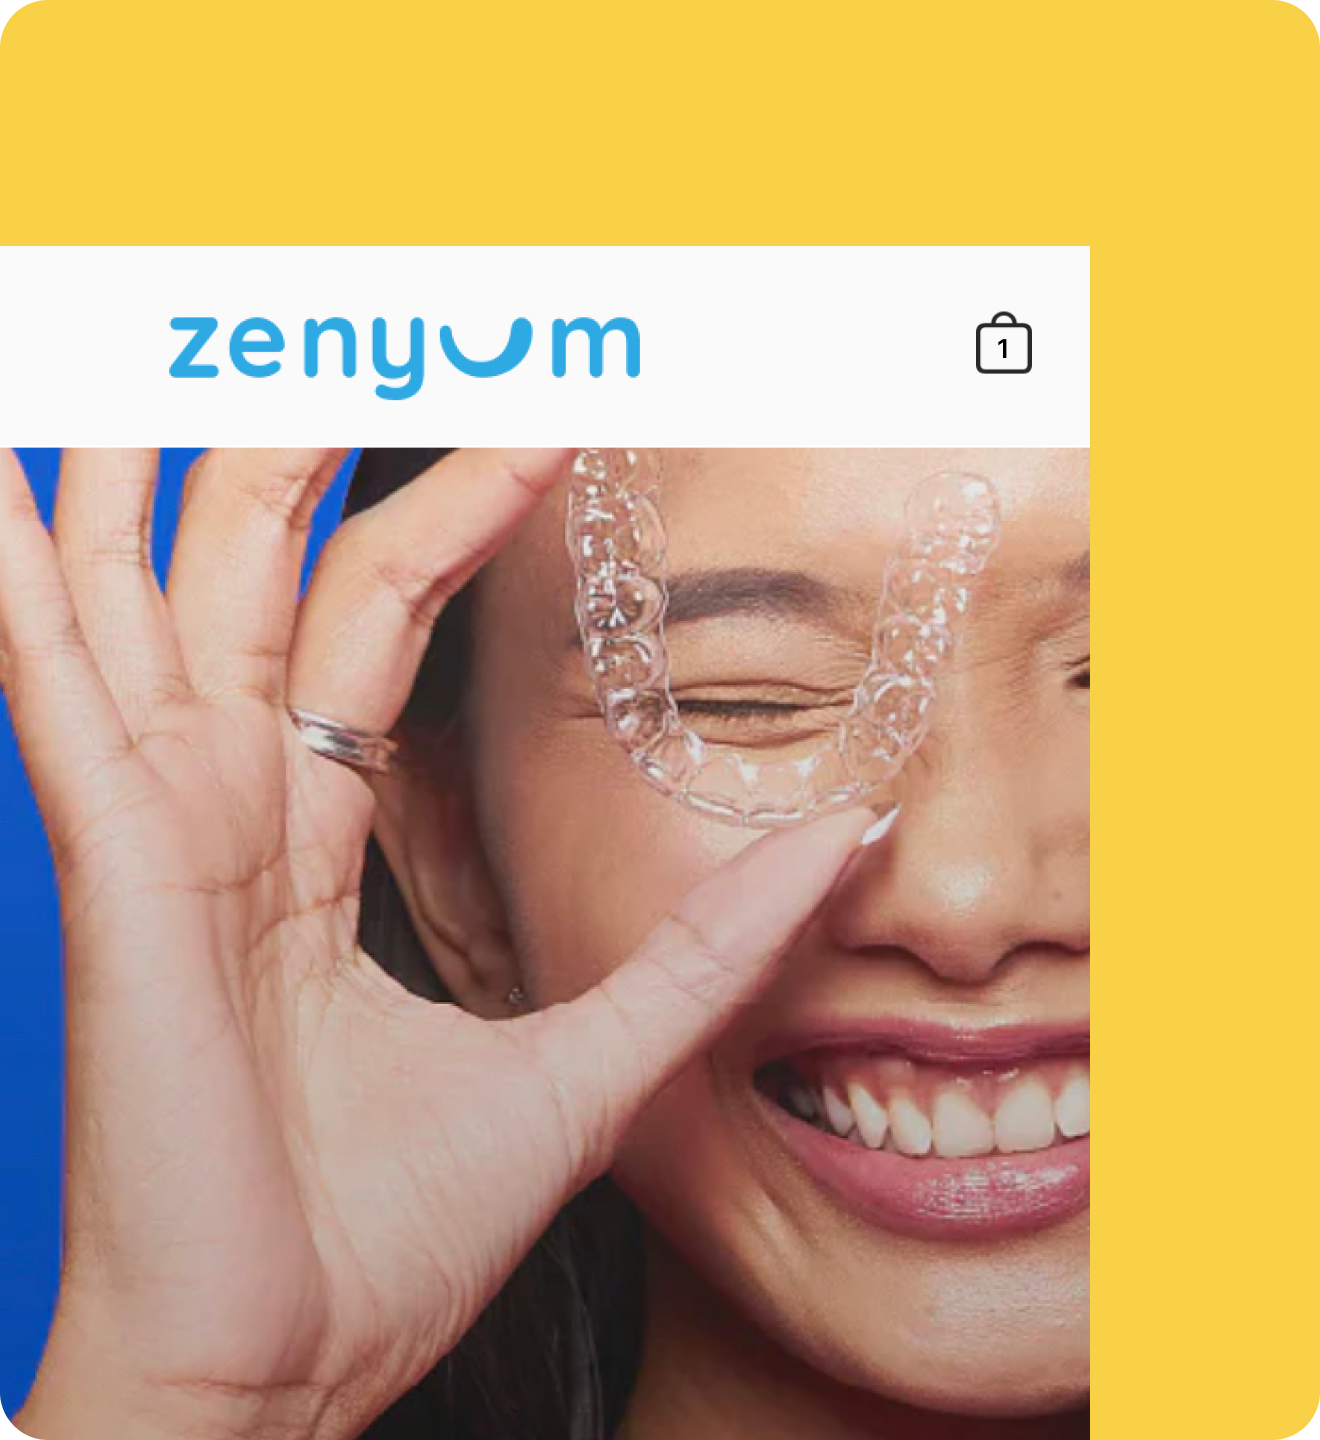 Triple your market coverage like Zenyum